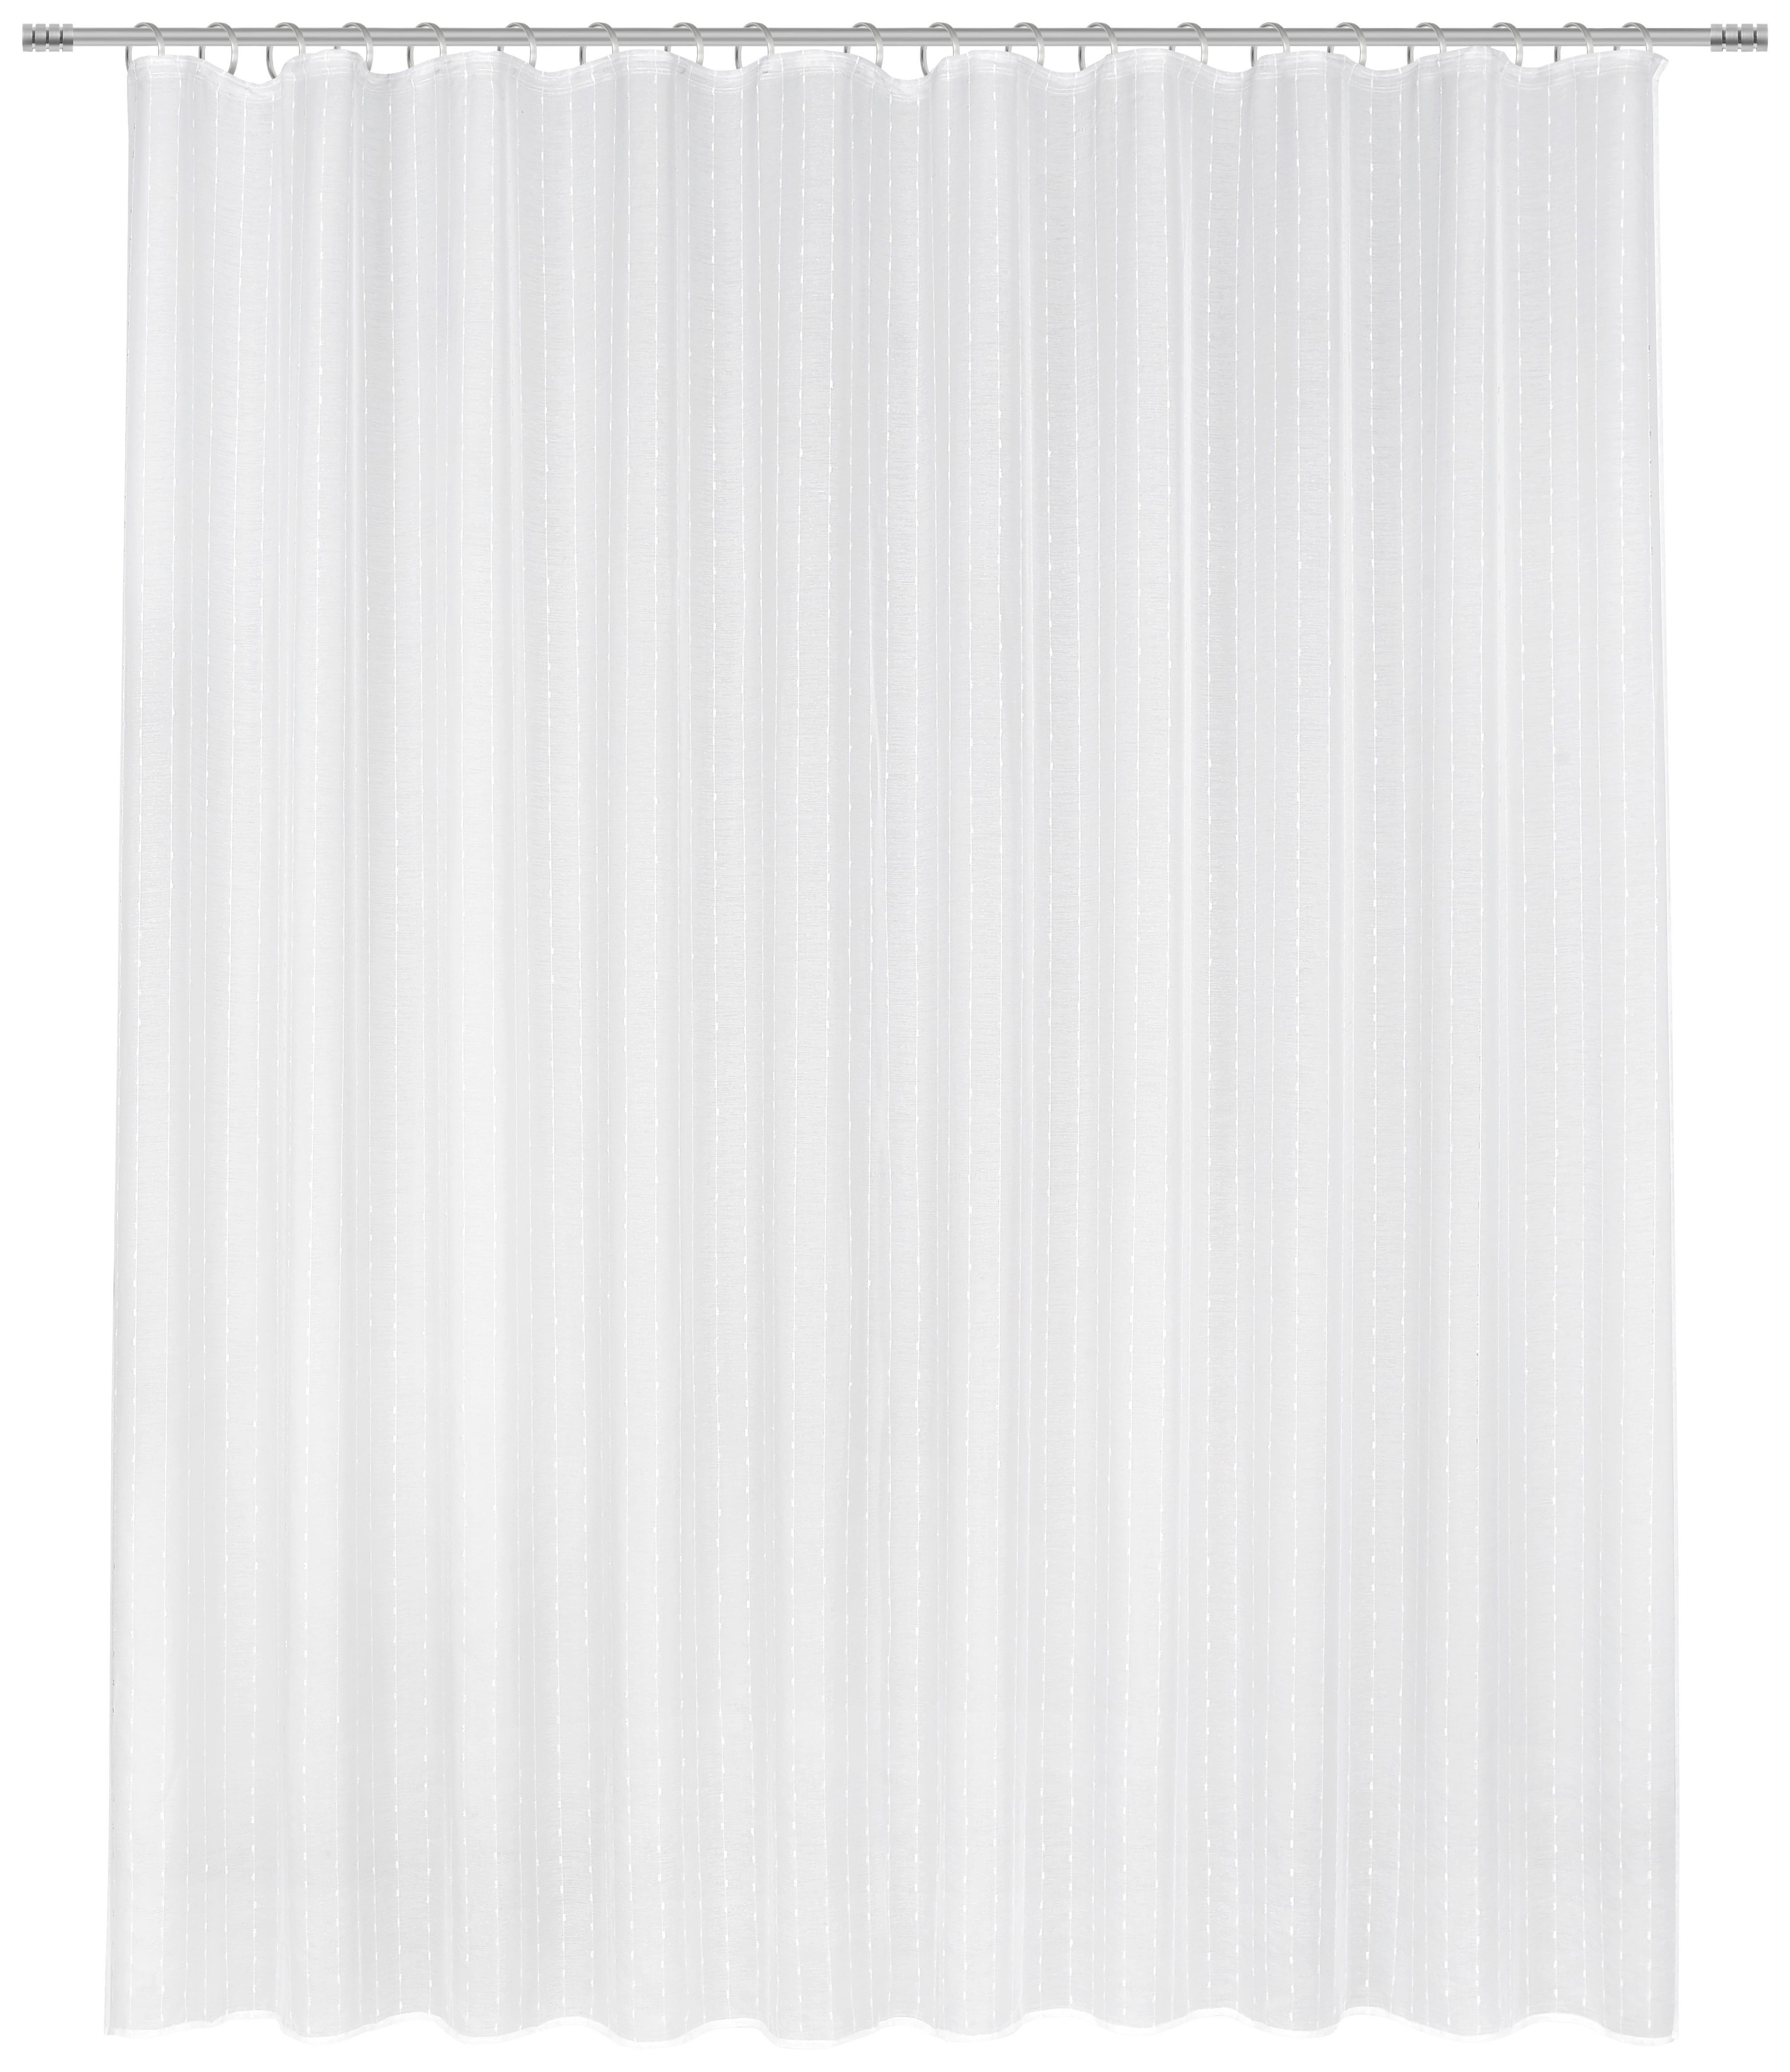 Fertigstore Lisa Store 3 ca. 300x245cm - Weiß, ROMANTIK / LANDHAUS, Textil (300/245cm) - Modern Living